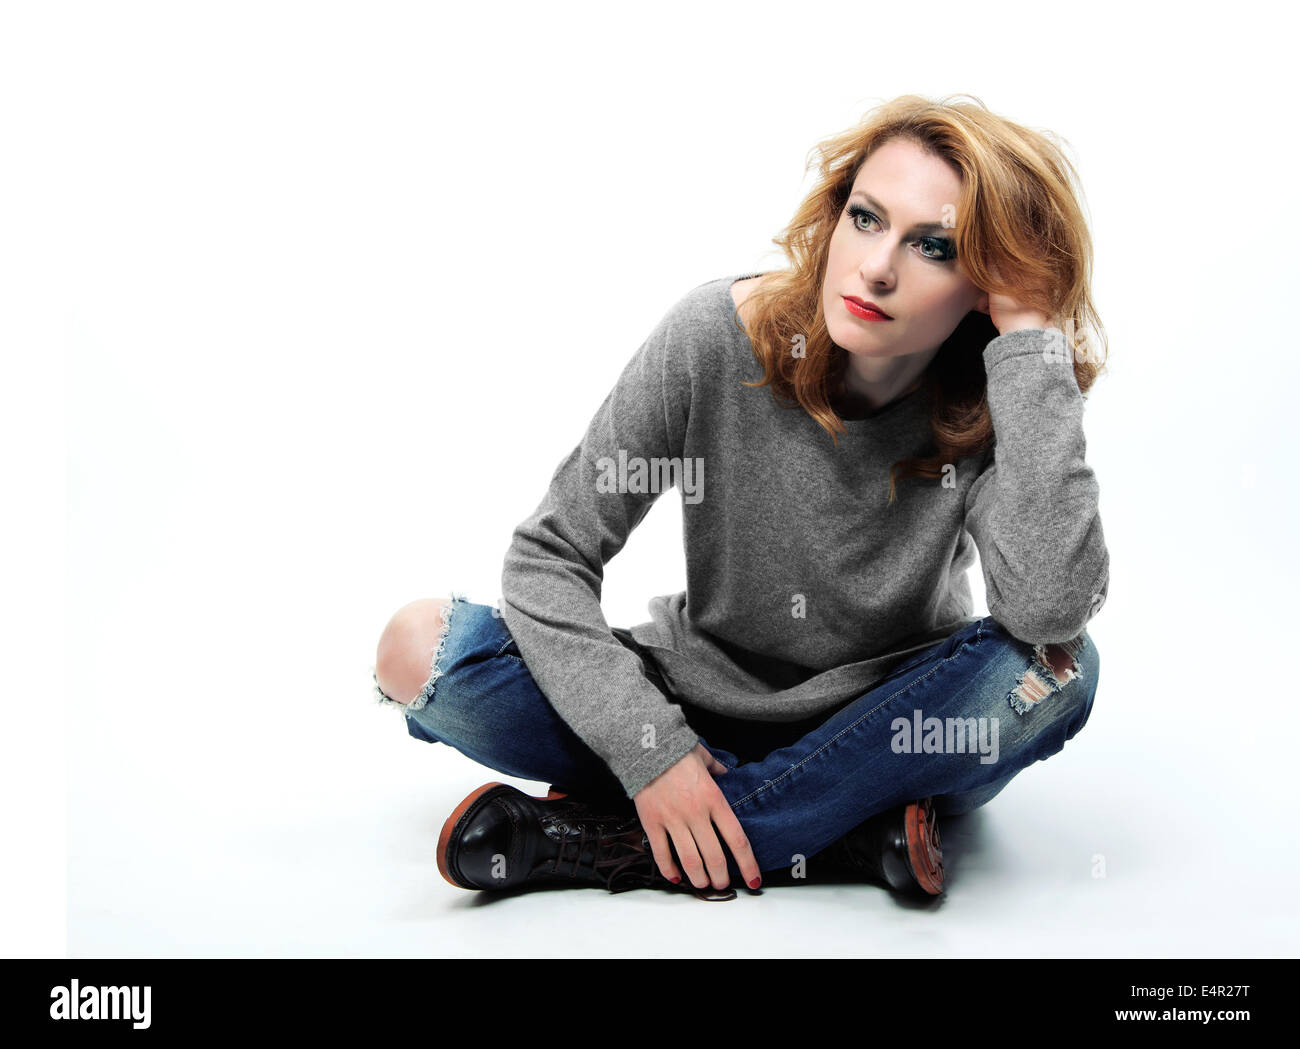 Thinking woman sitting on floor isolated on white background. Stock Photo